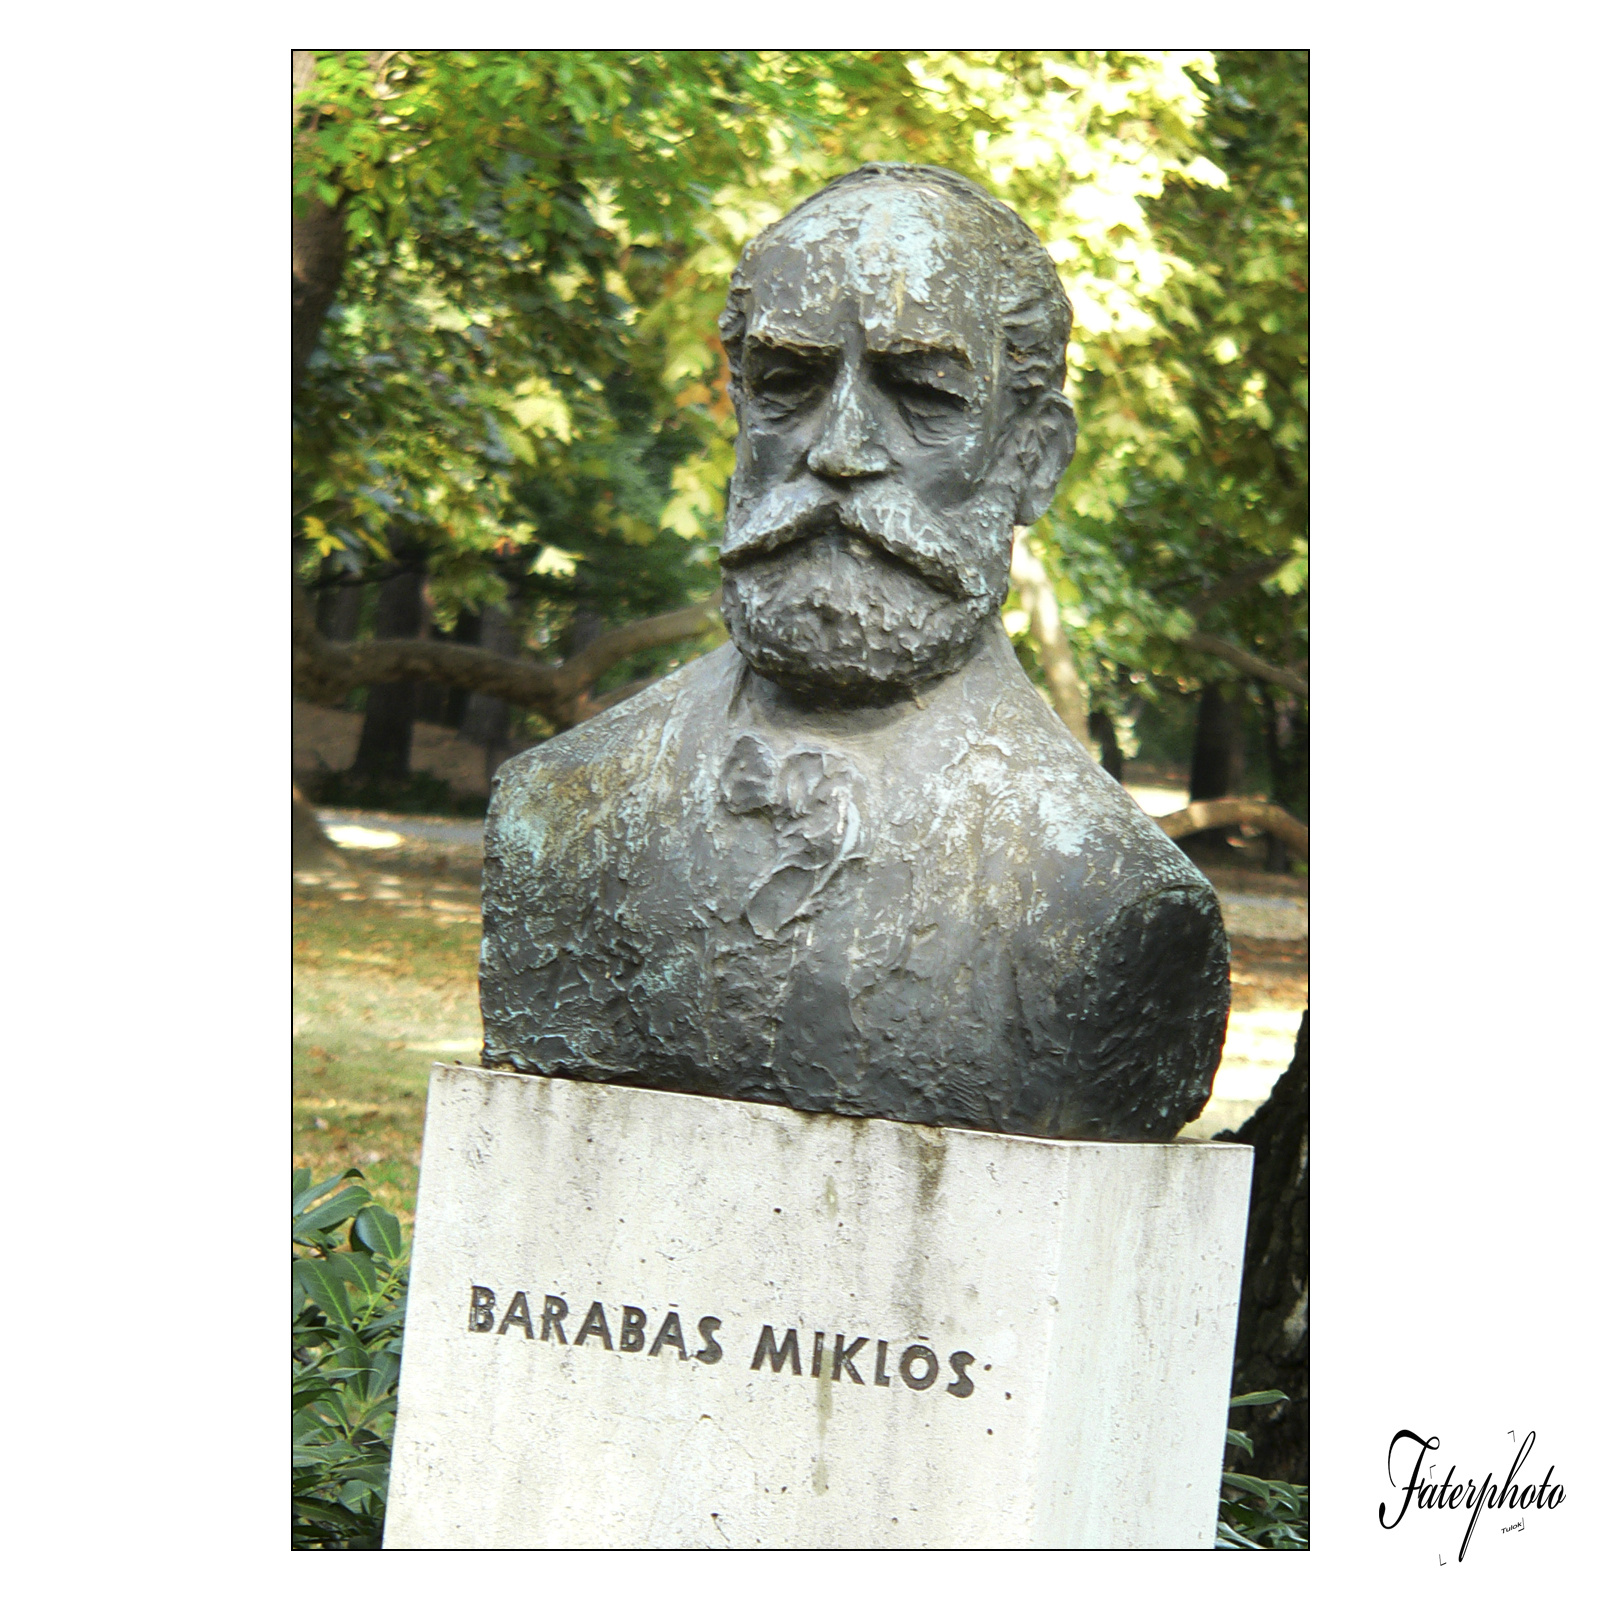 Barabás Miklos